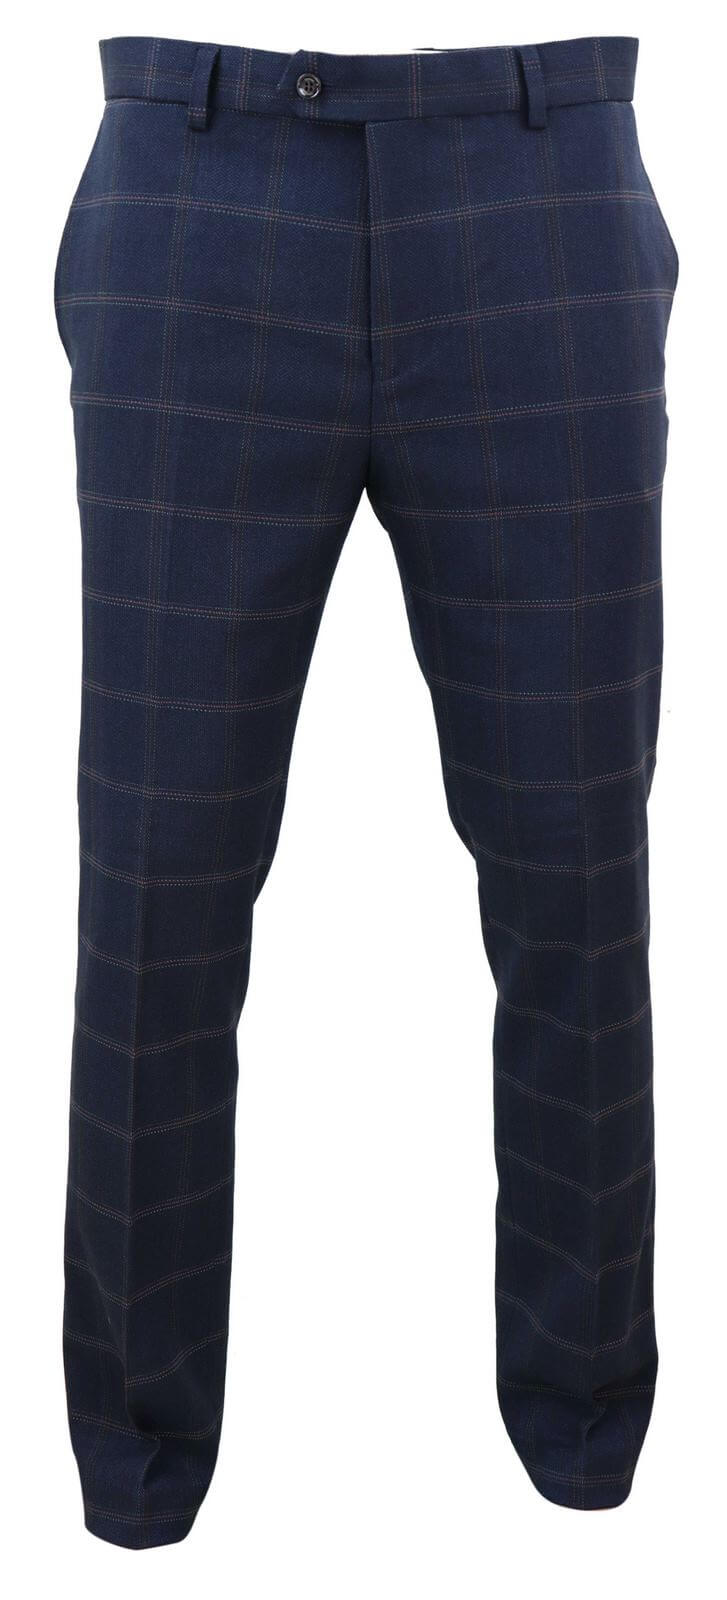 Men's Navy Blue Vintage Check Trousers - Cavani Connall | Happy Gentleman